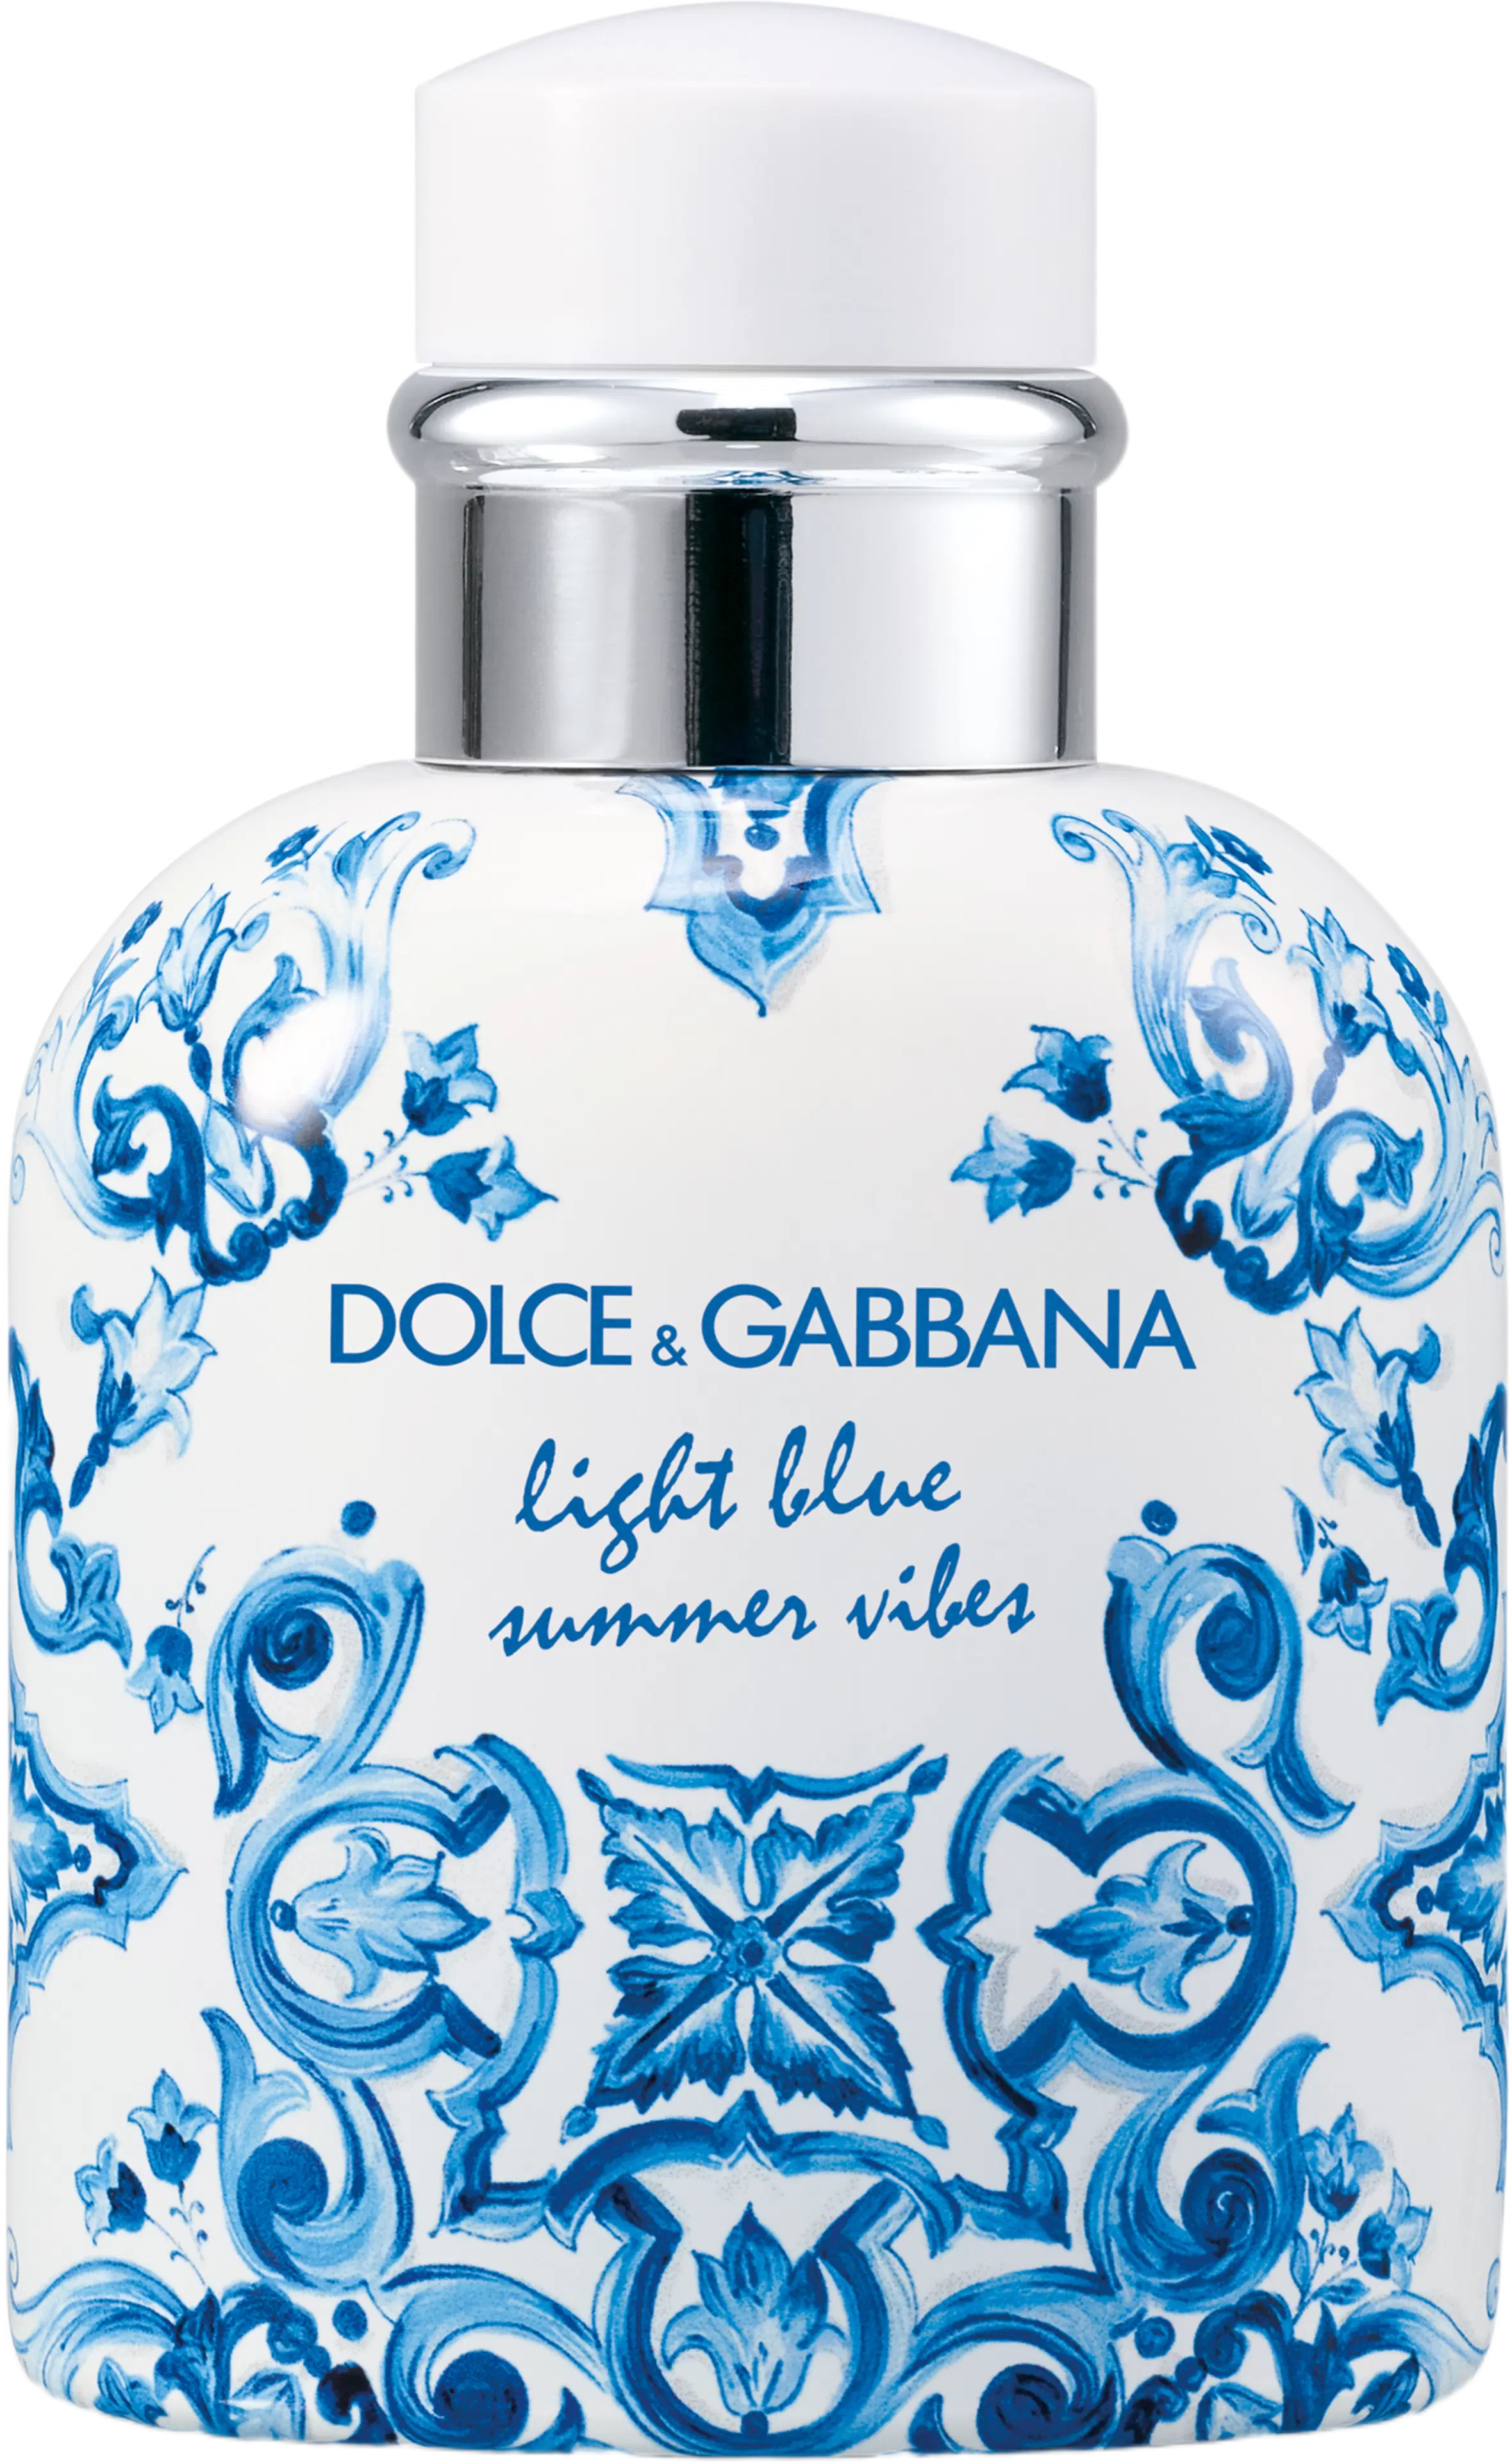 DOLCE & GABBANA Light Blue Pour Homme Summer Vibes EdT tuoksu 75 ml